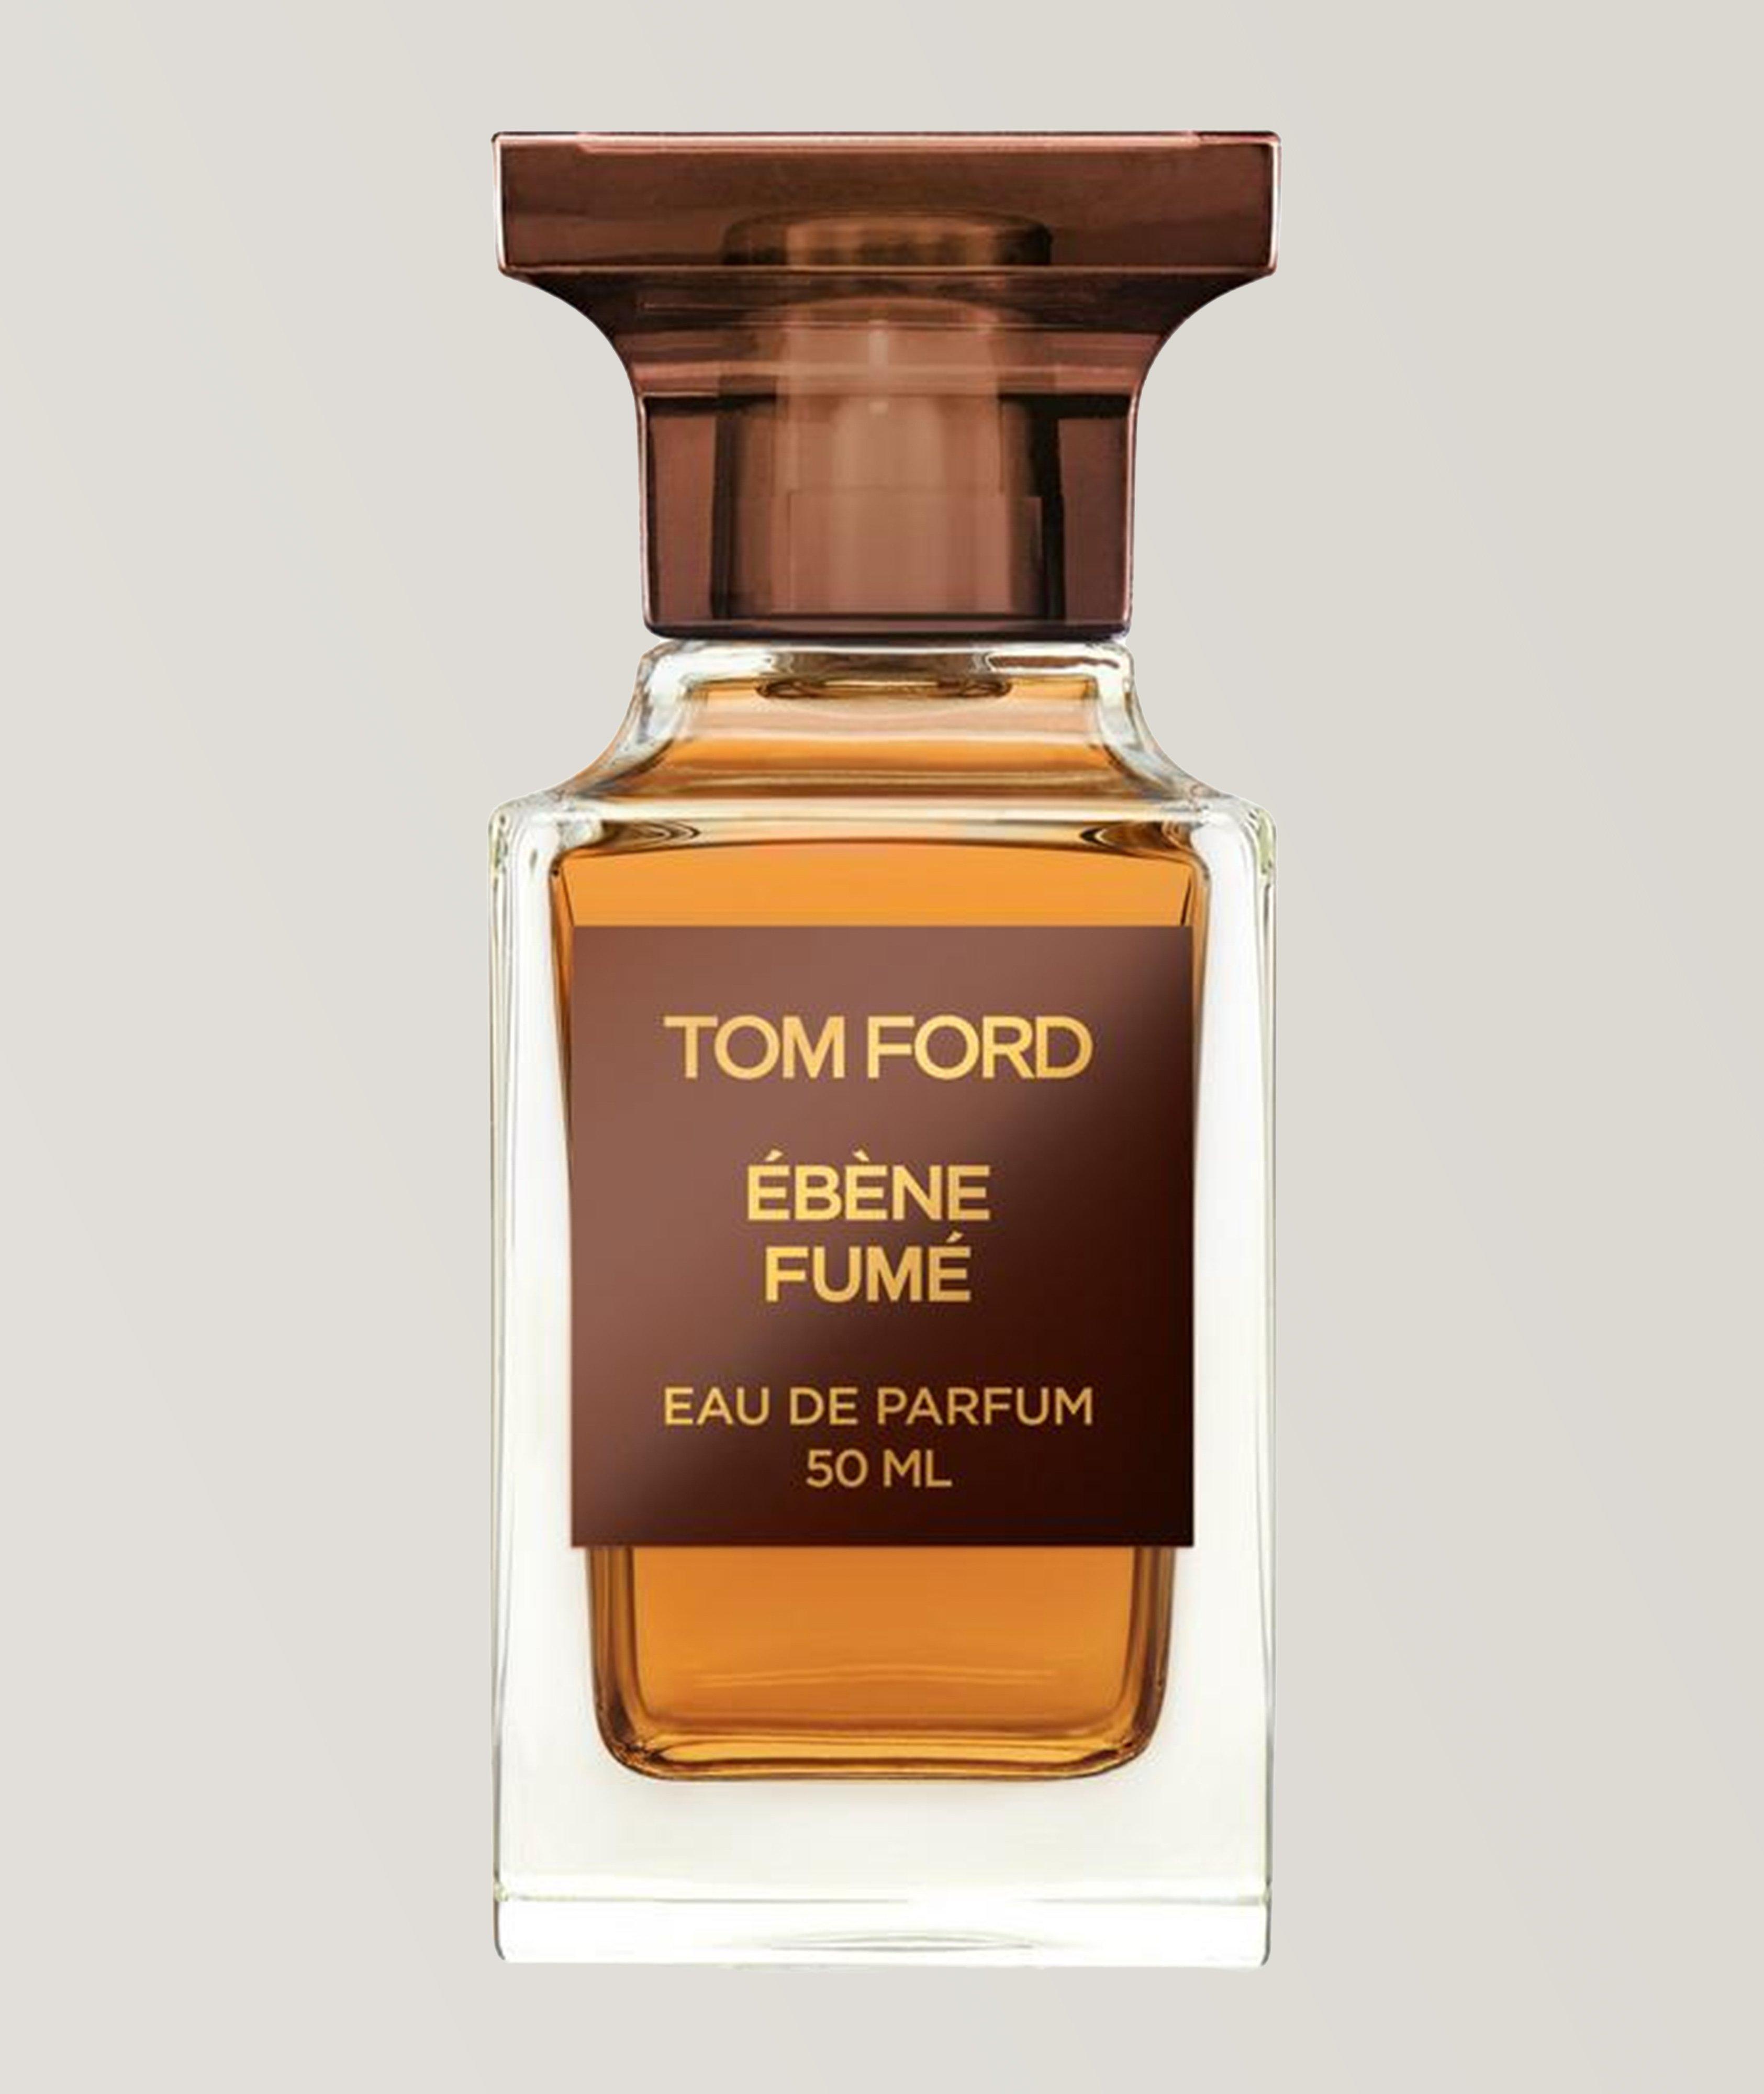 TOM FORD Ebene Fume Eau De Parfum 50ml